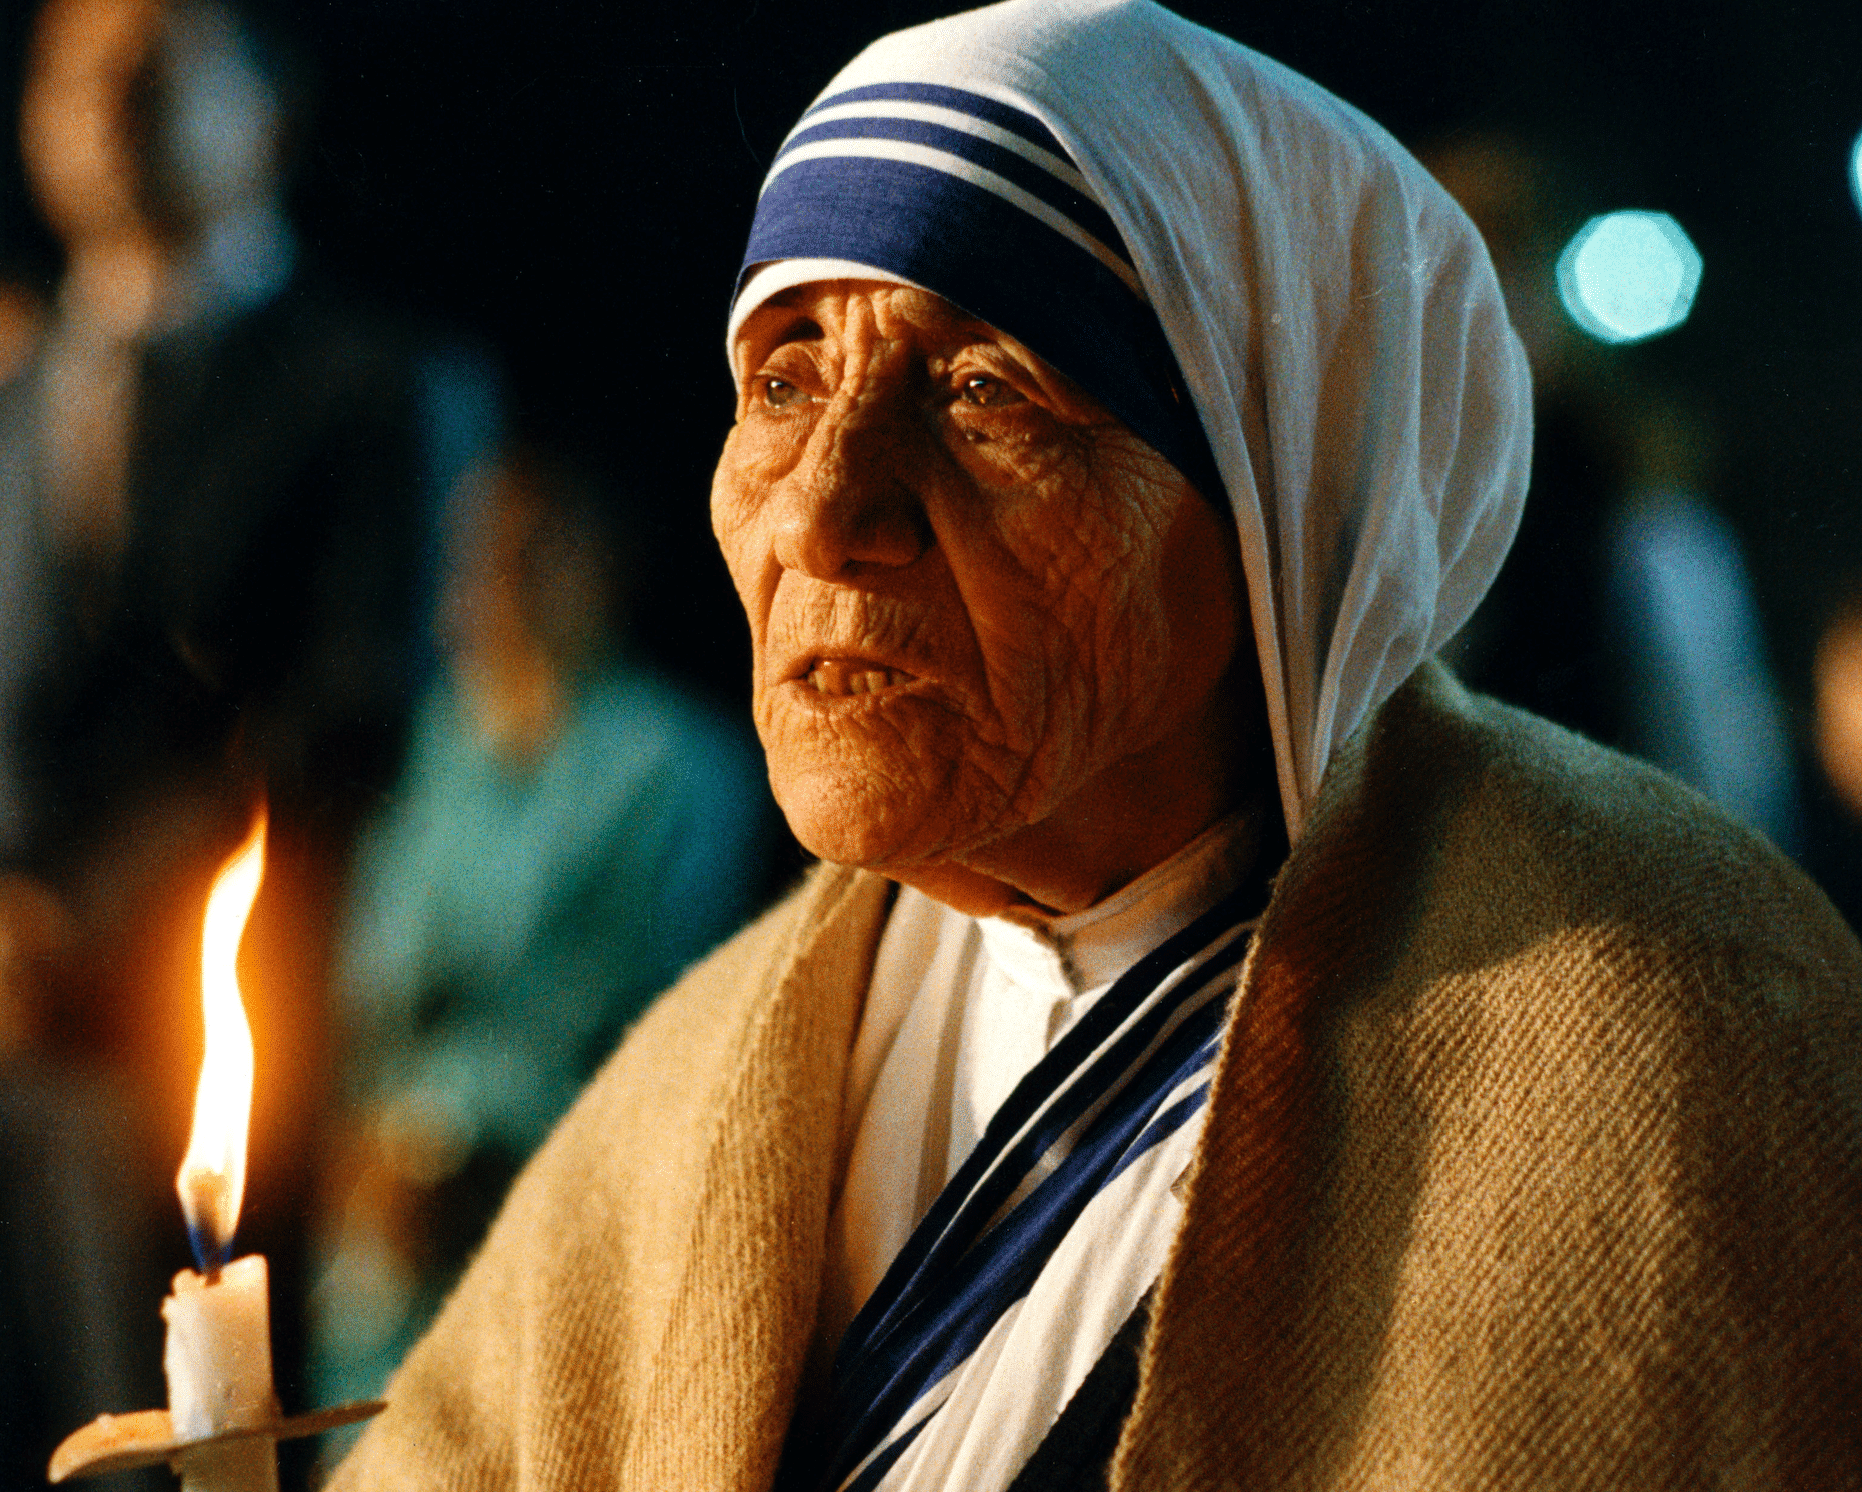 Mother Teresa - Quotes, Death & Saint